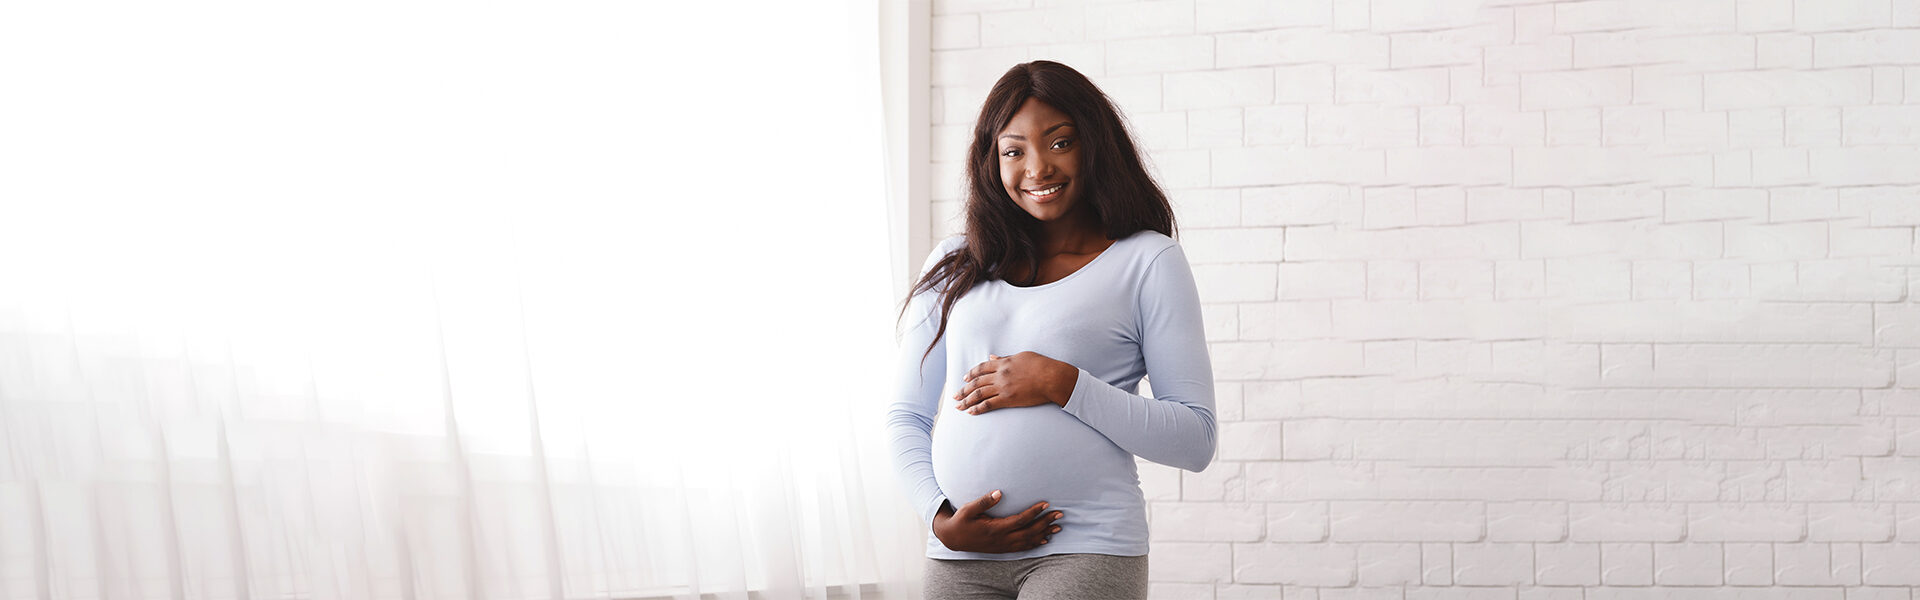 Gum Disease Treatment during Pregnancy: Is It Safe?